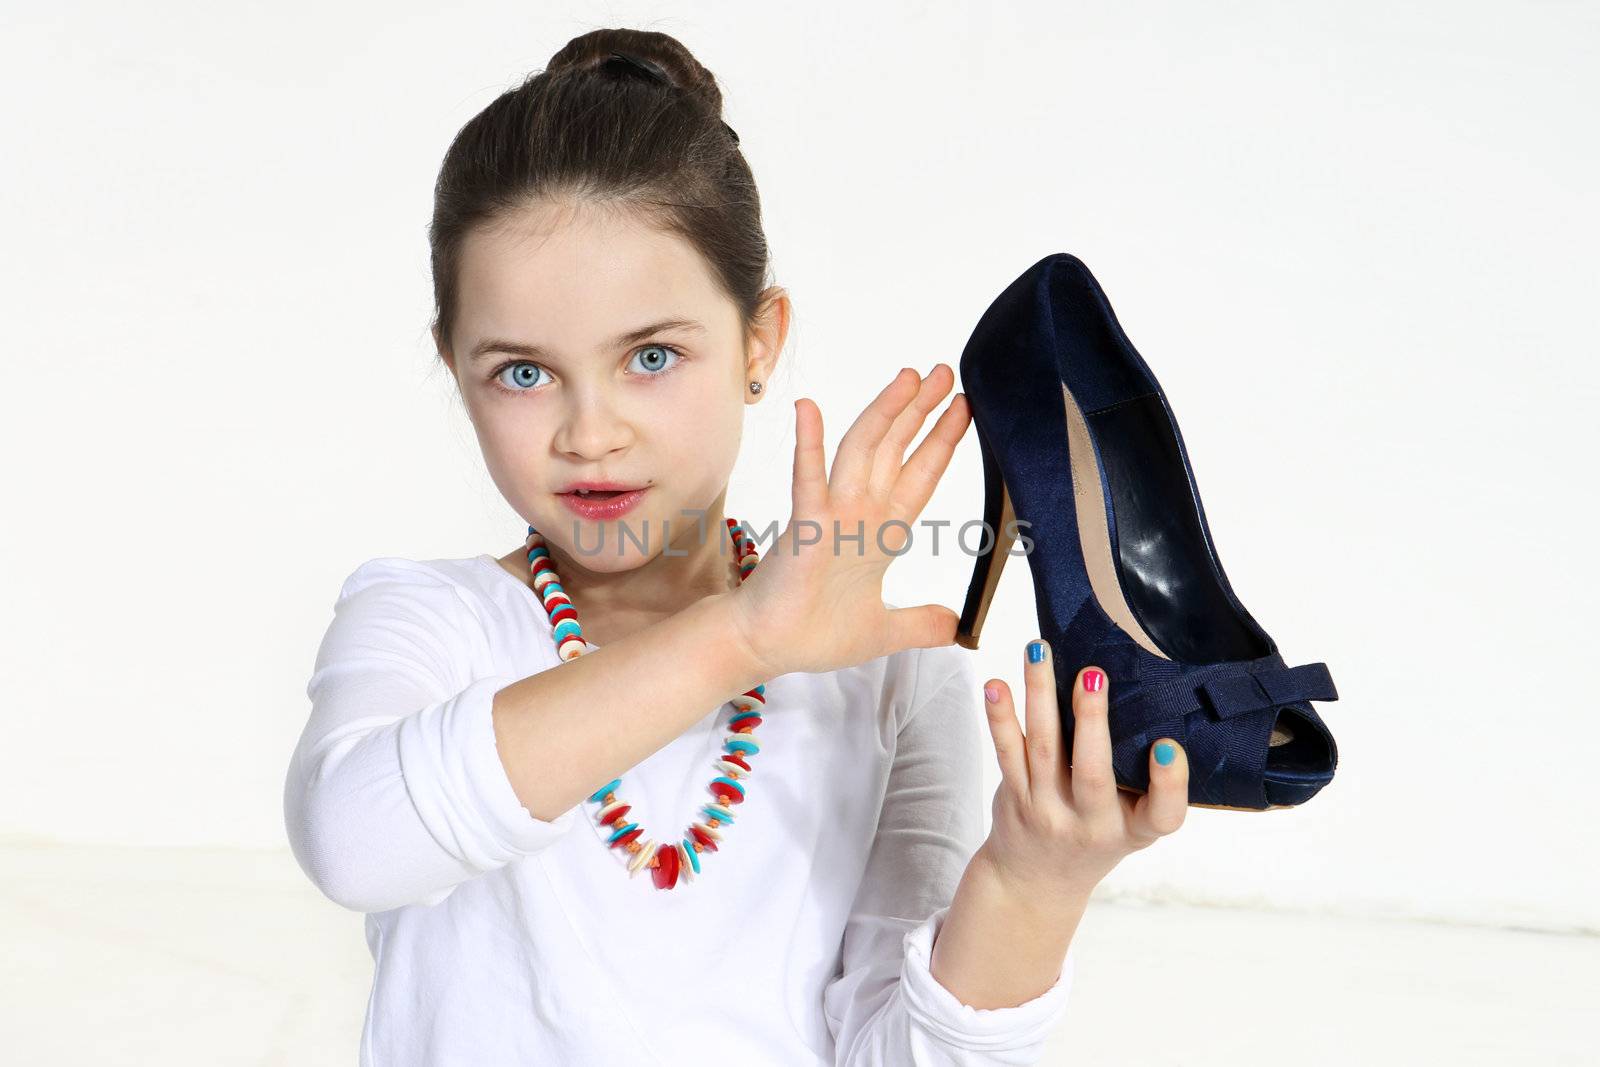 Little fashionista holding shoe in studio by robert_przybysz